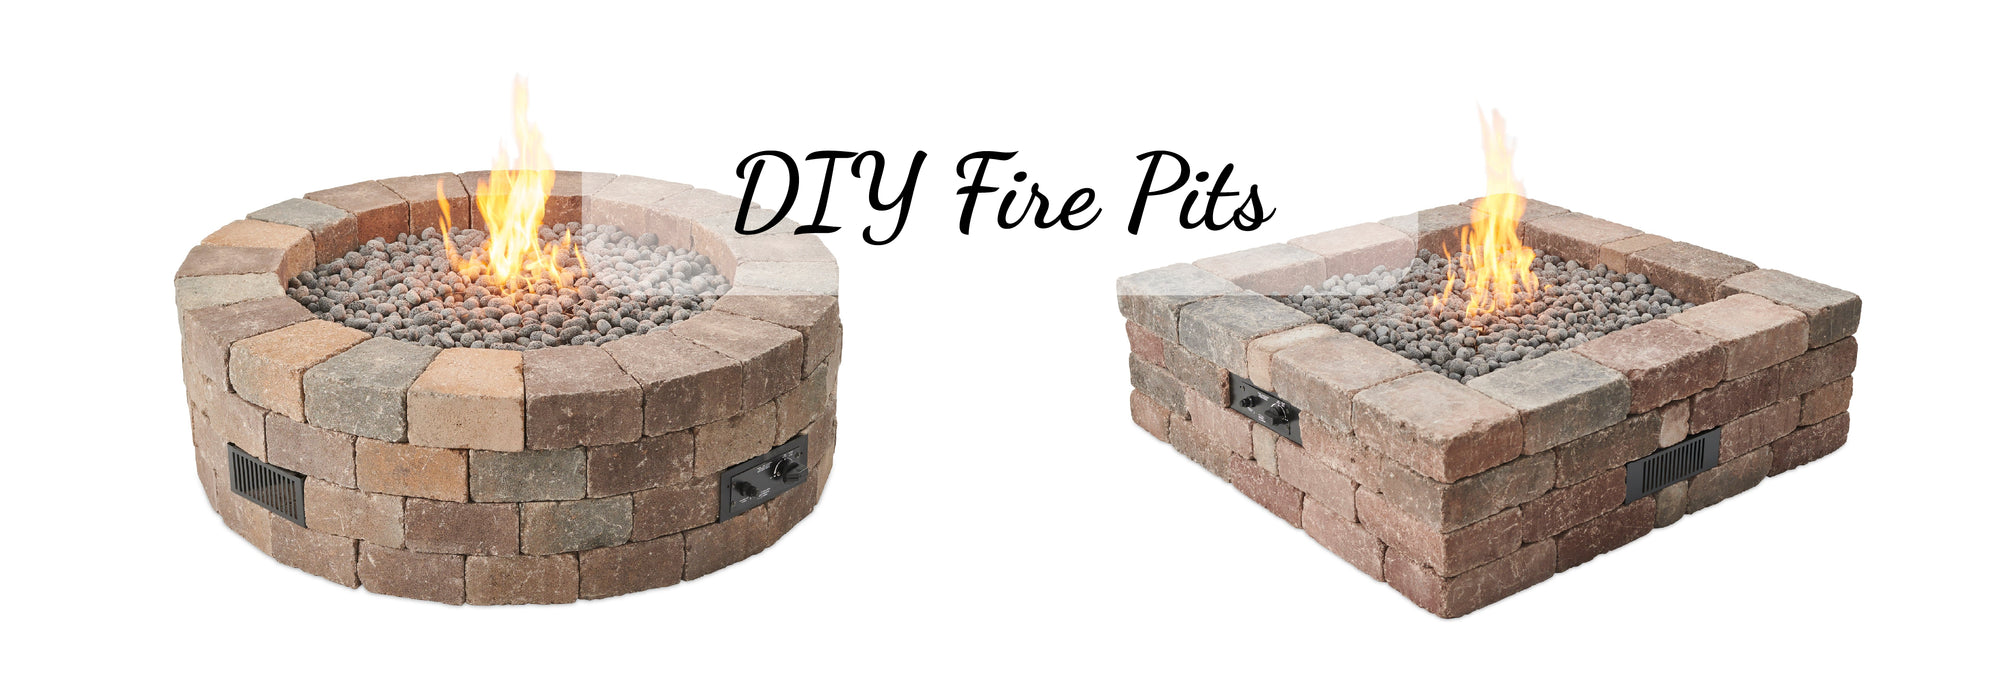 DIY Fire Pits